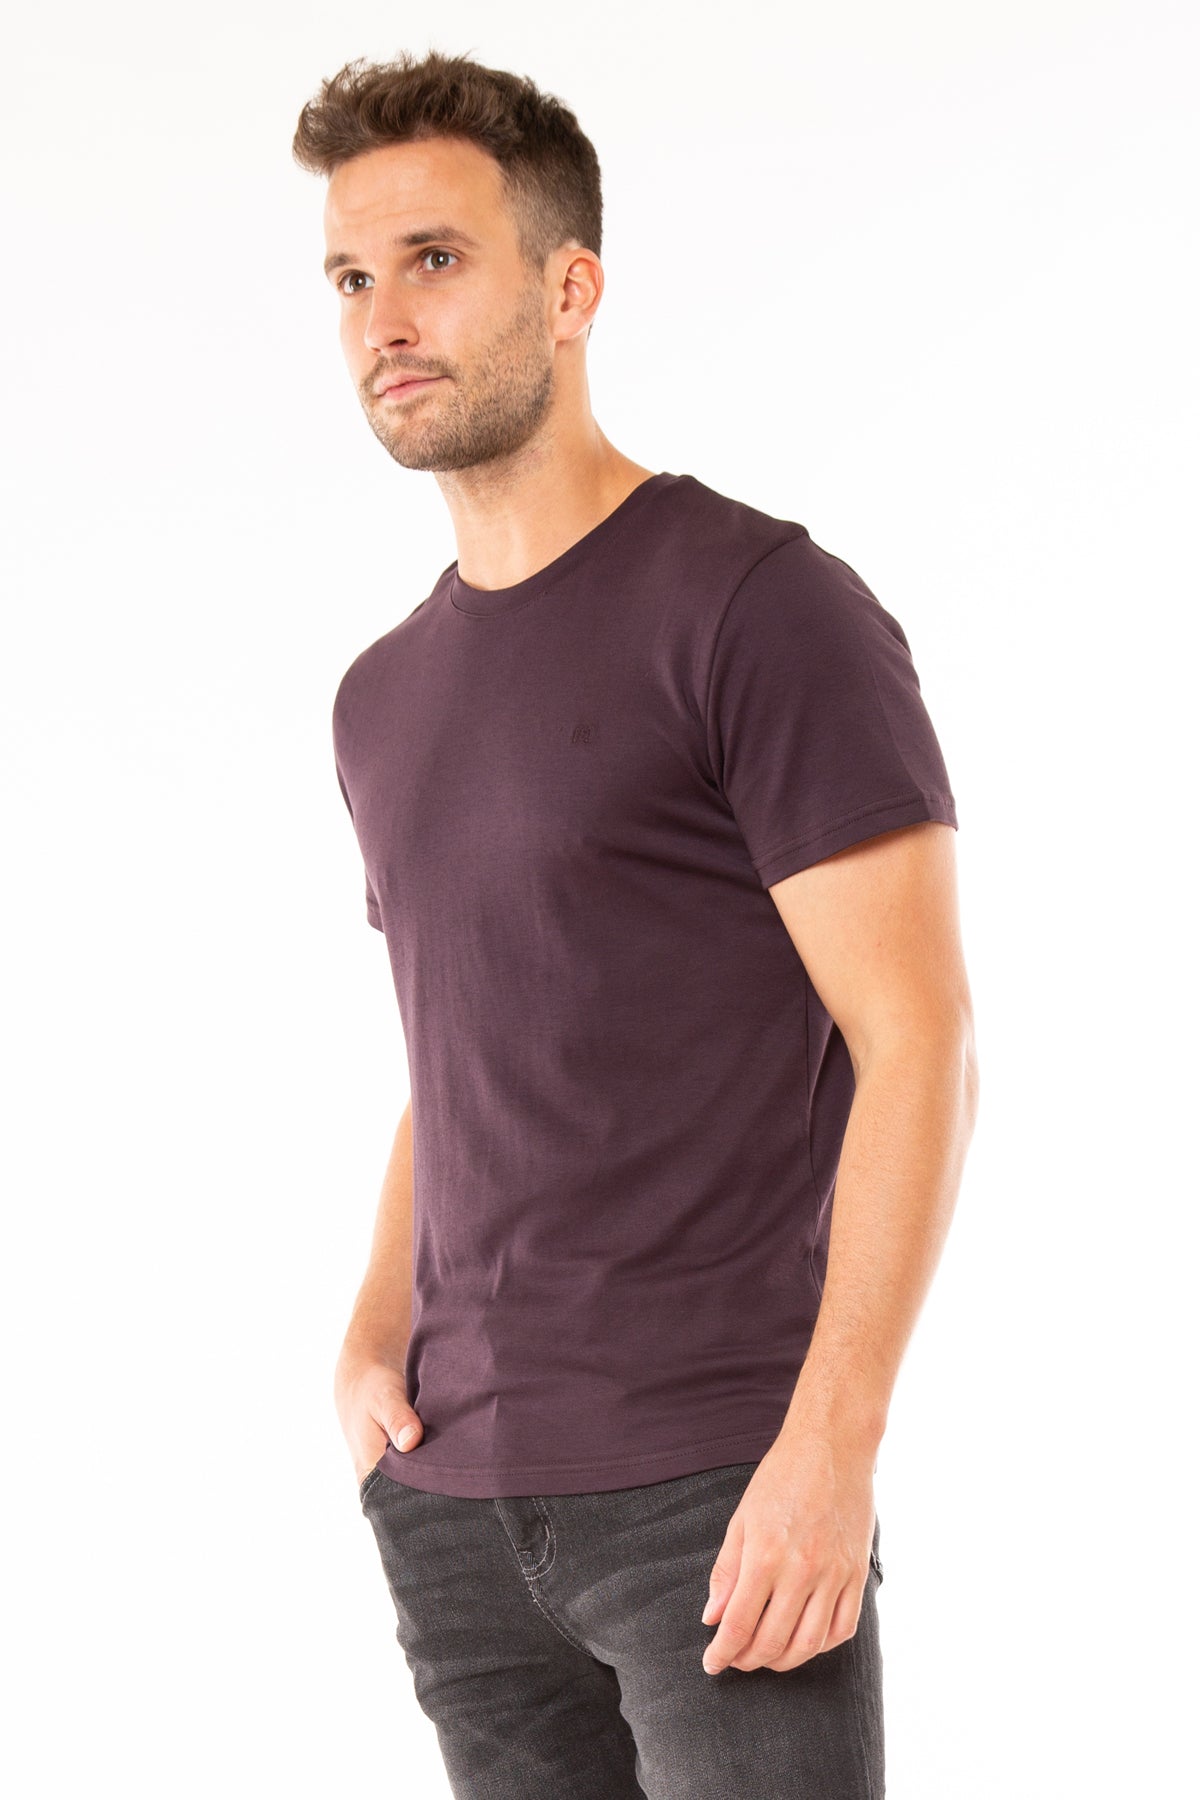 Superdry Mens Edit Jersey T-Shirt mulled plum